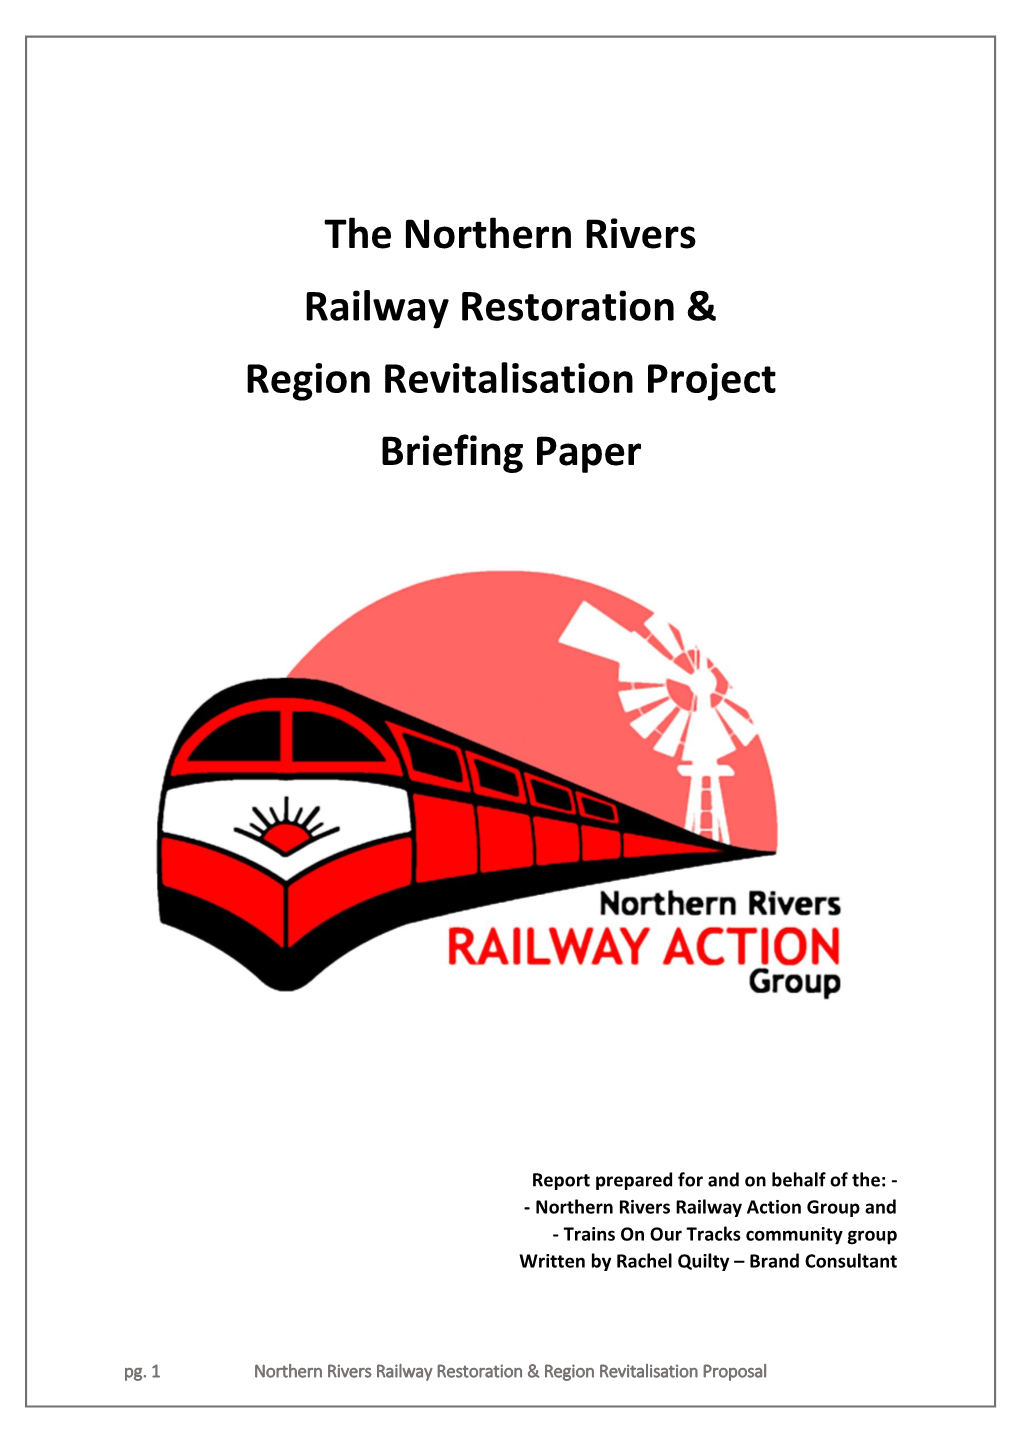 The Northern Rivers Railway Restoration & Region Revitalisation